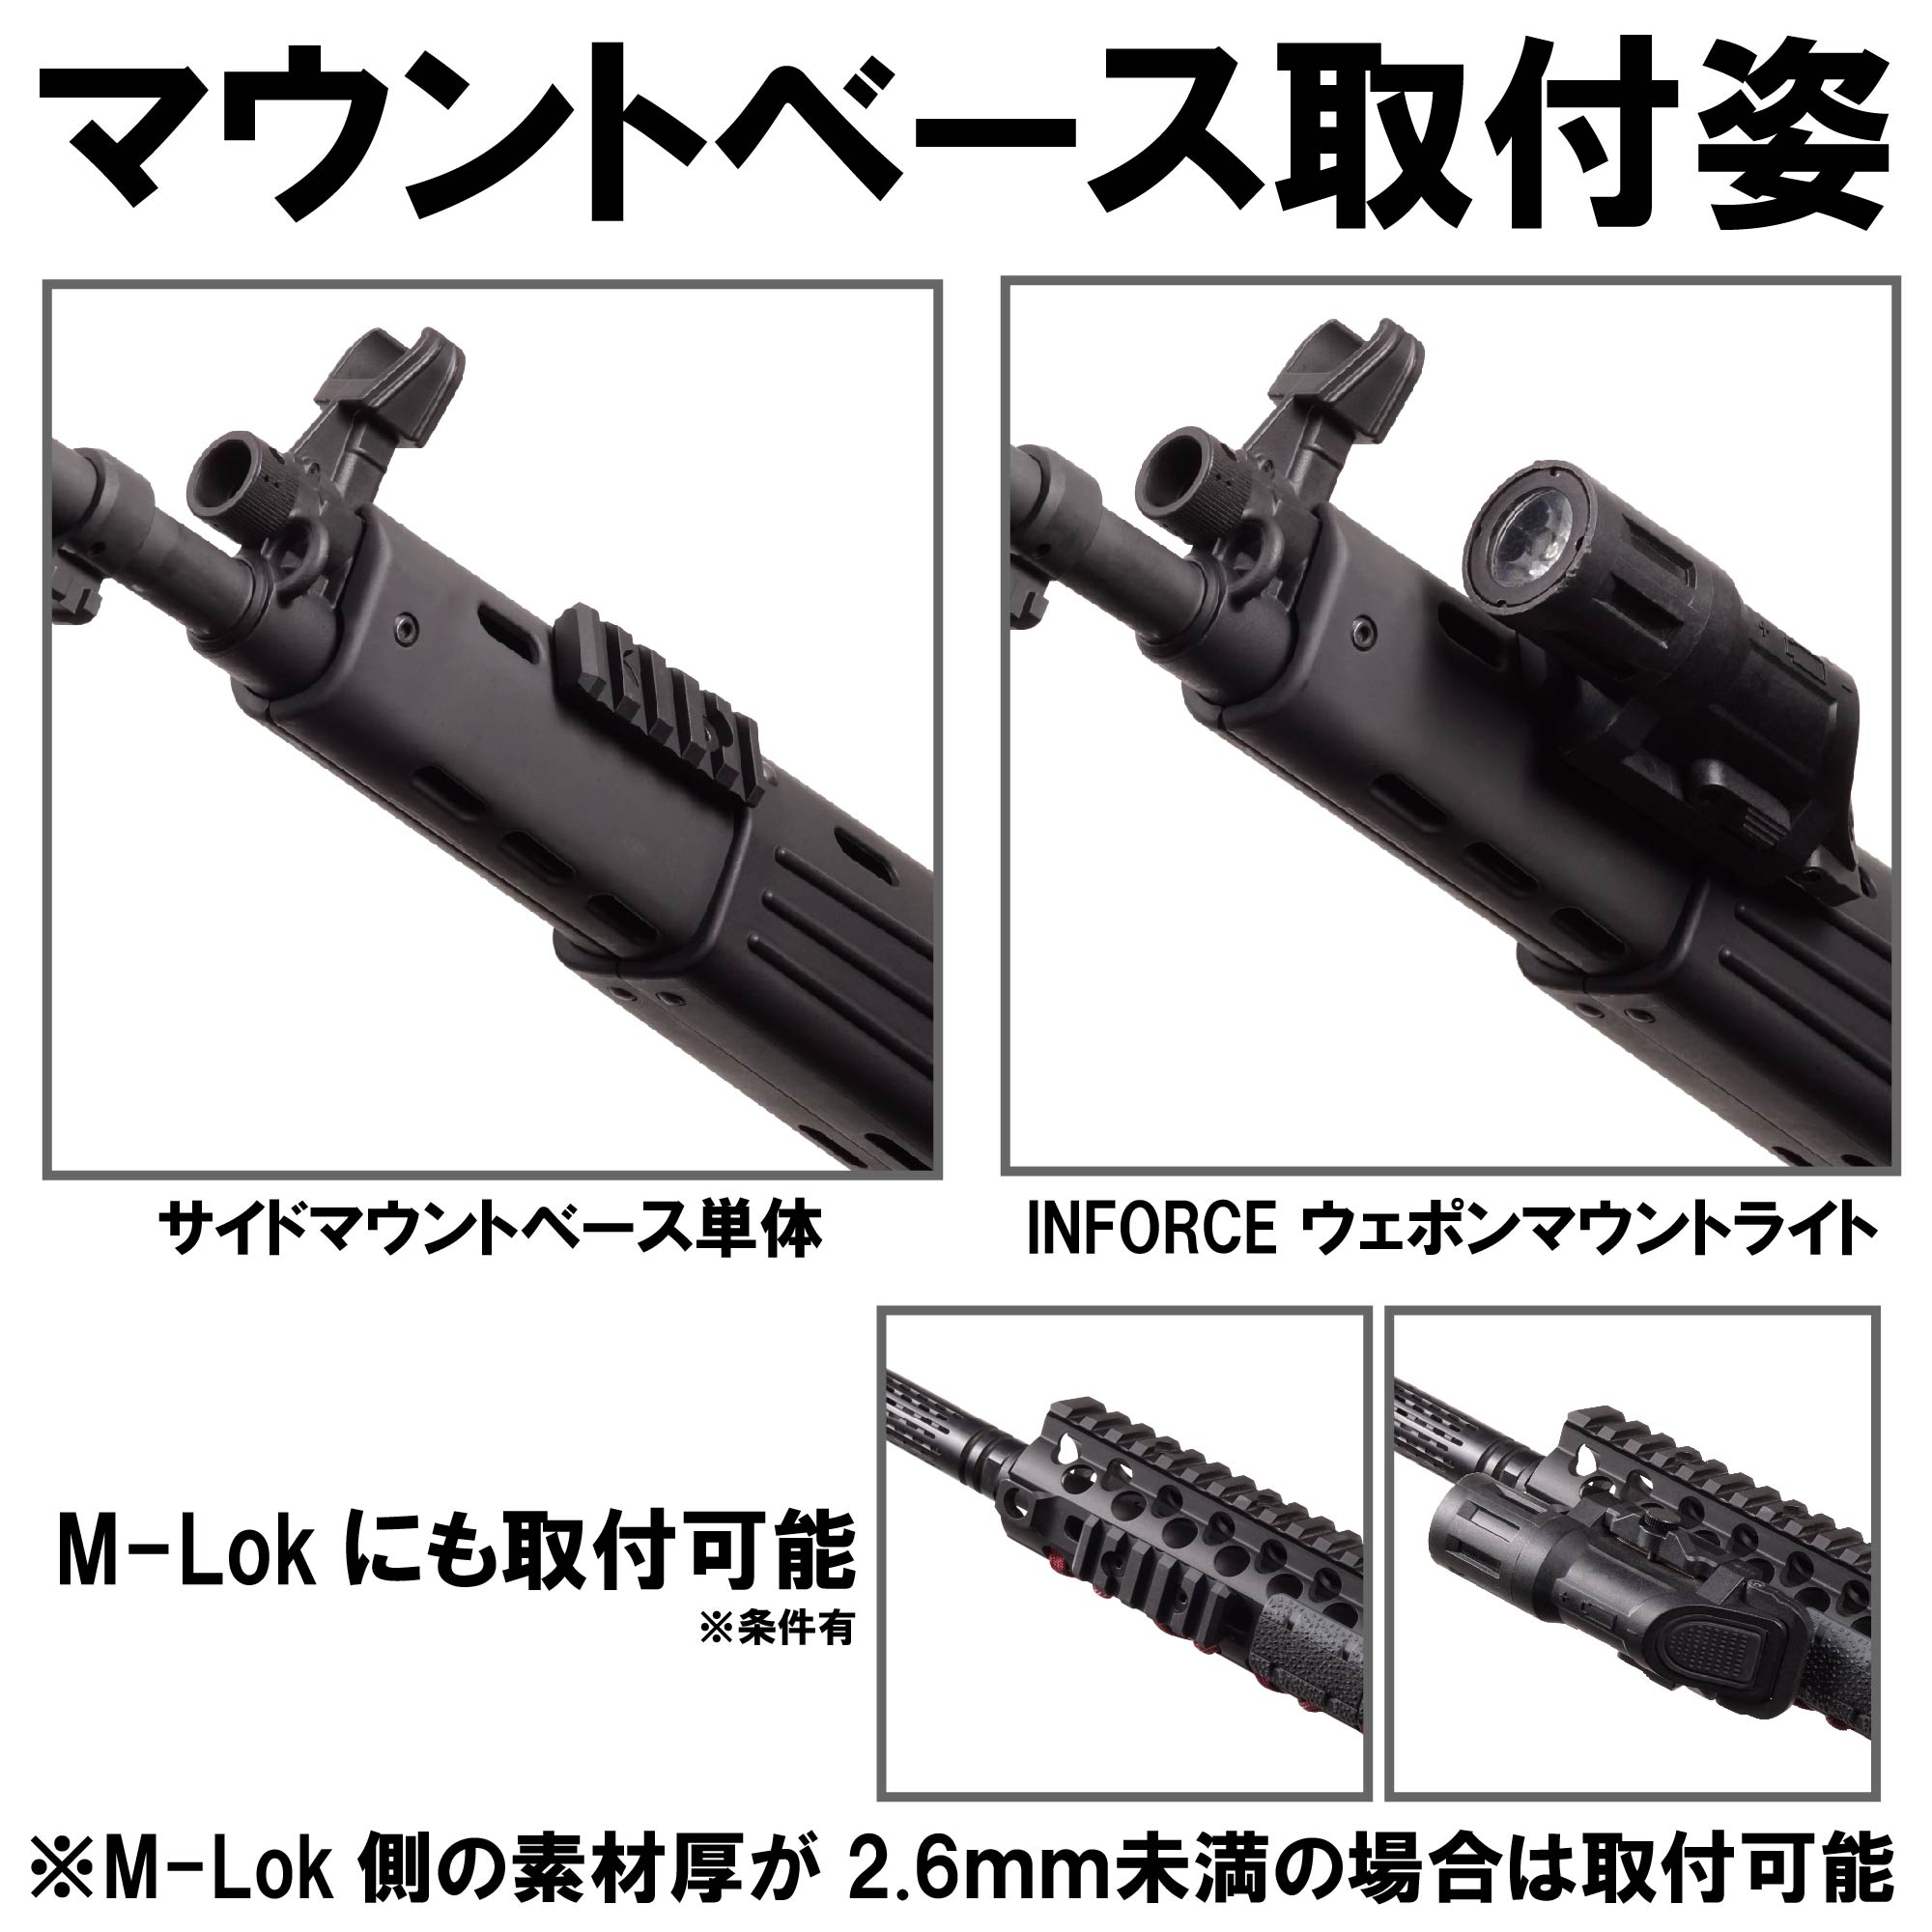 OTS 89式小銃 マウントベース 実物 - ミリタリー